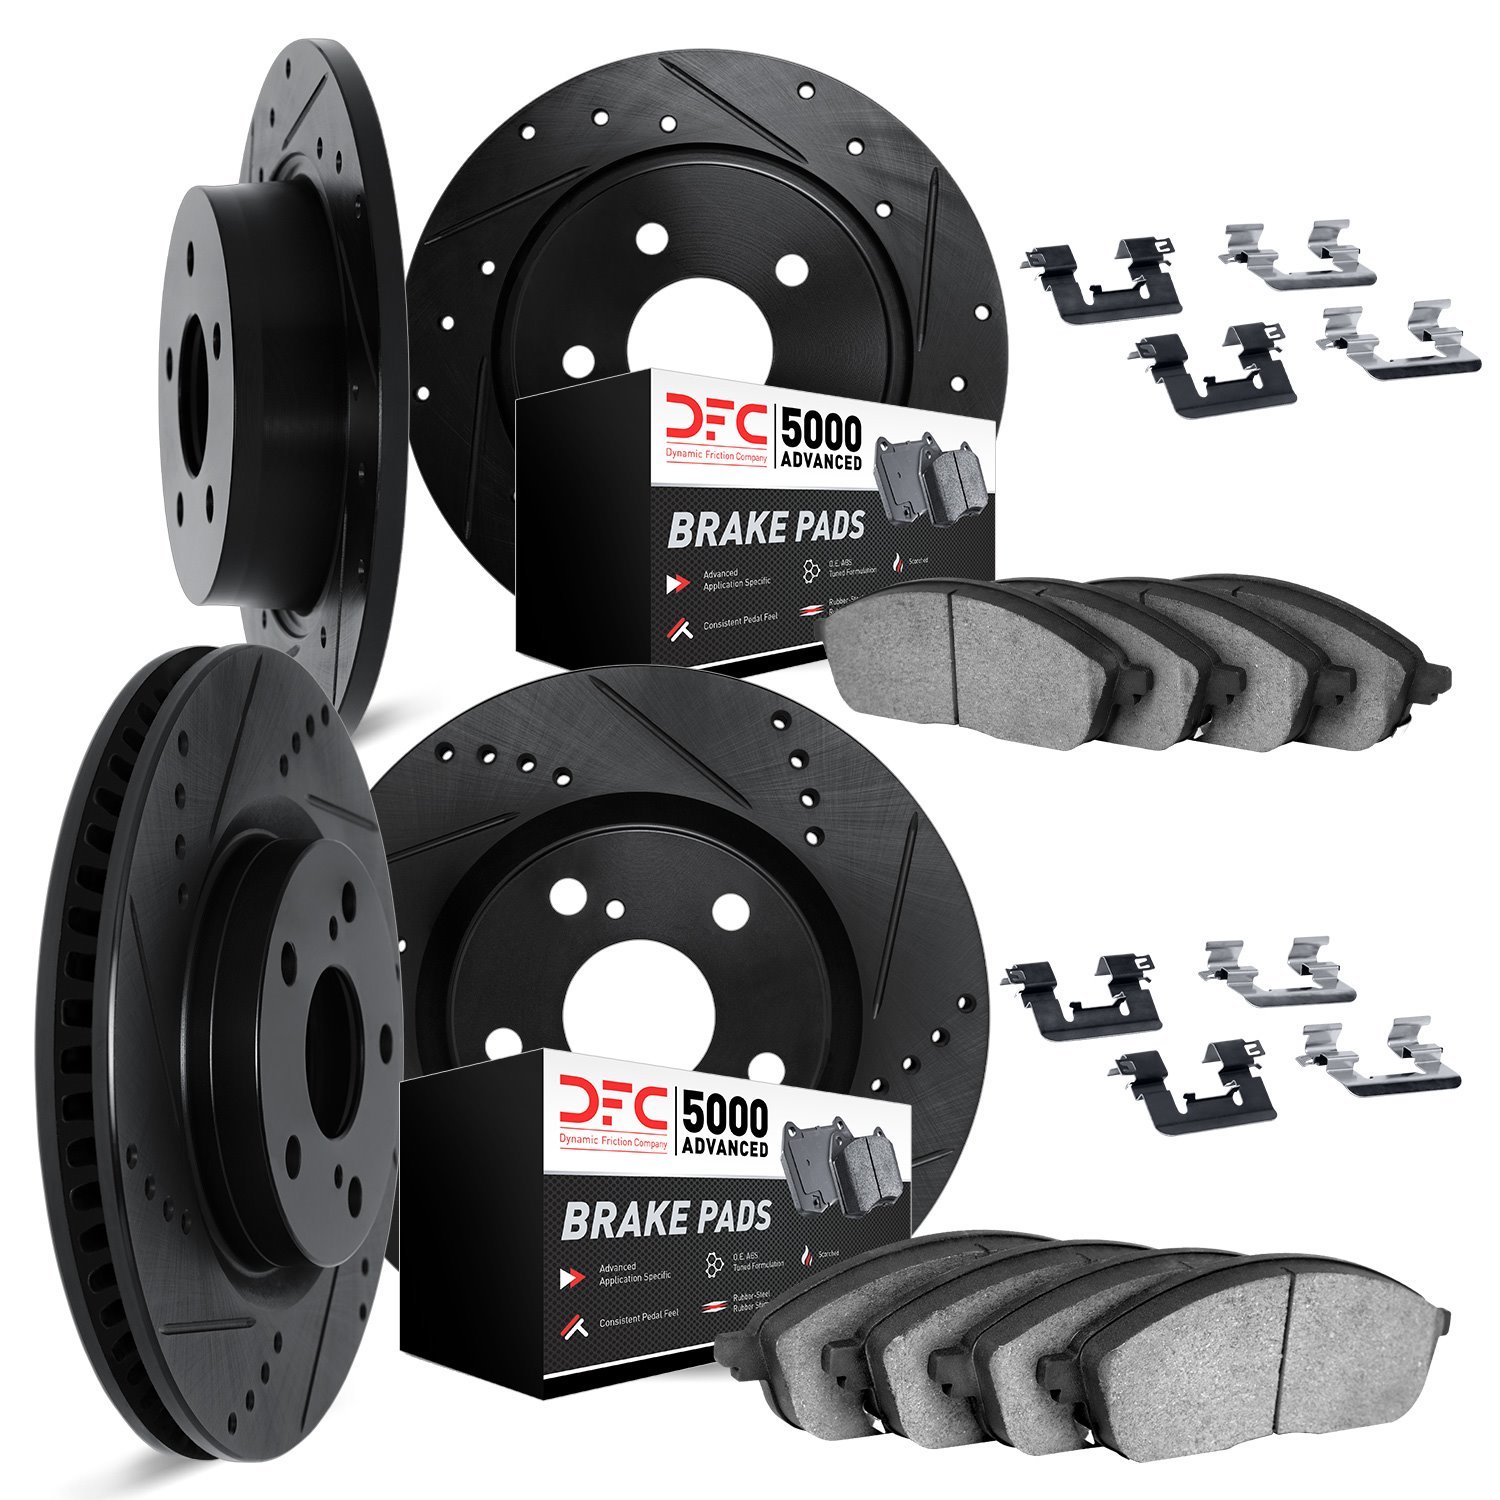 8514-03143 Drilled/Slotted Brake Rotors w/5000 Advanced Brake Pads Kit & Hardware [Black], Fits Select Kia/Hyundai/Genesis, Posi